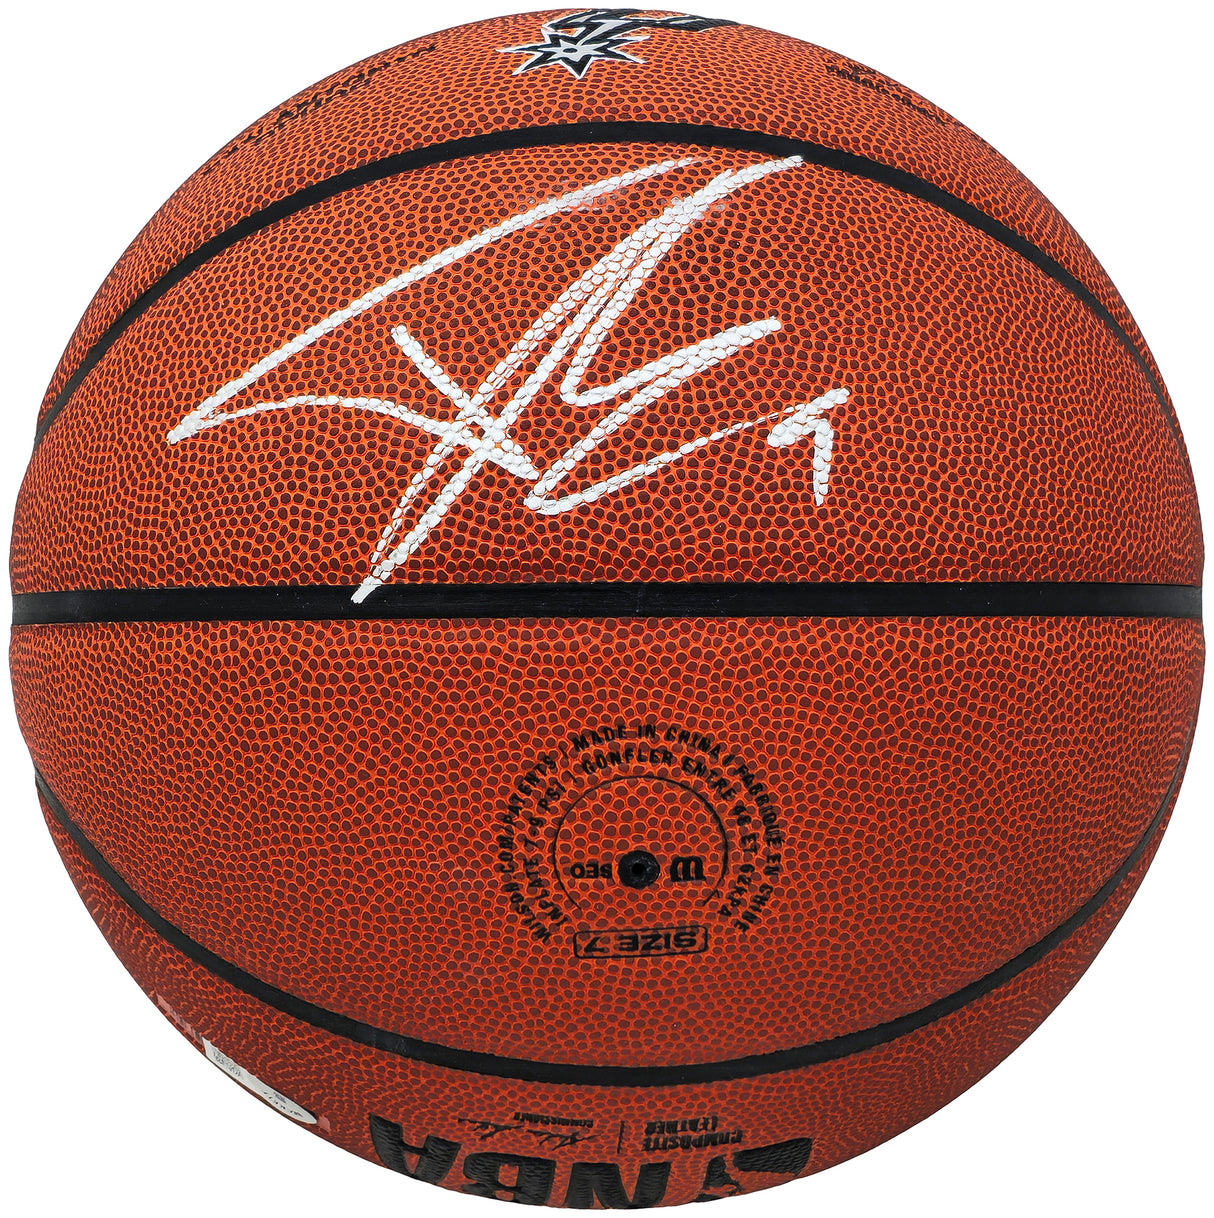 Tony Parker Autographed Authentic Leather San Antonio Spurs Logo Basketball San Antonio Spurs Beckett BAS Witness Stock #222837